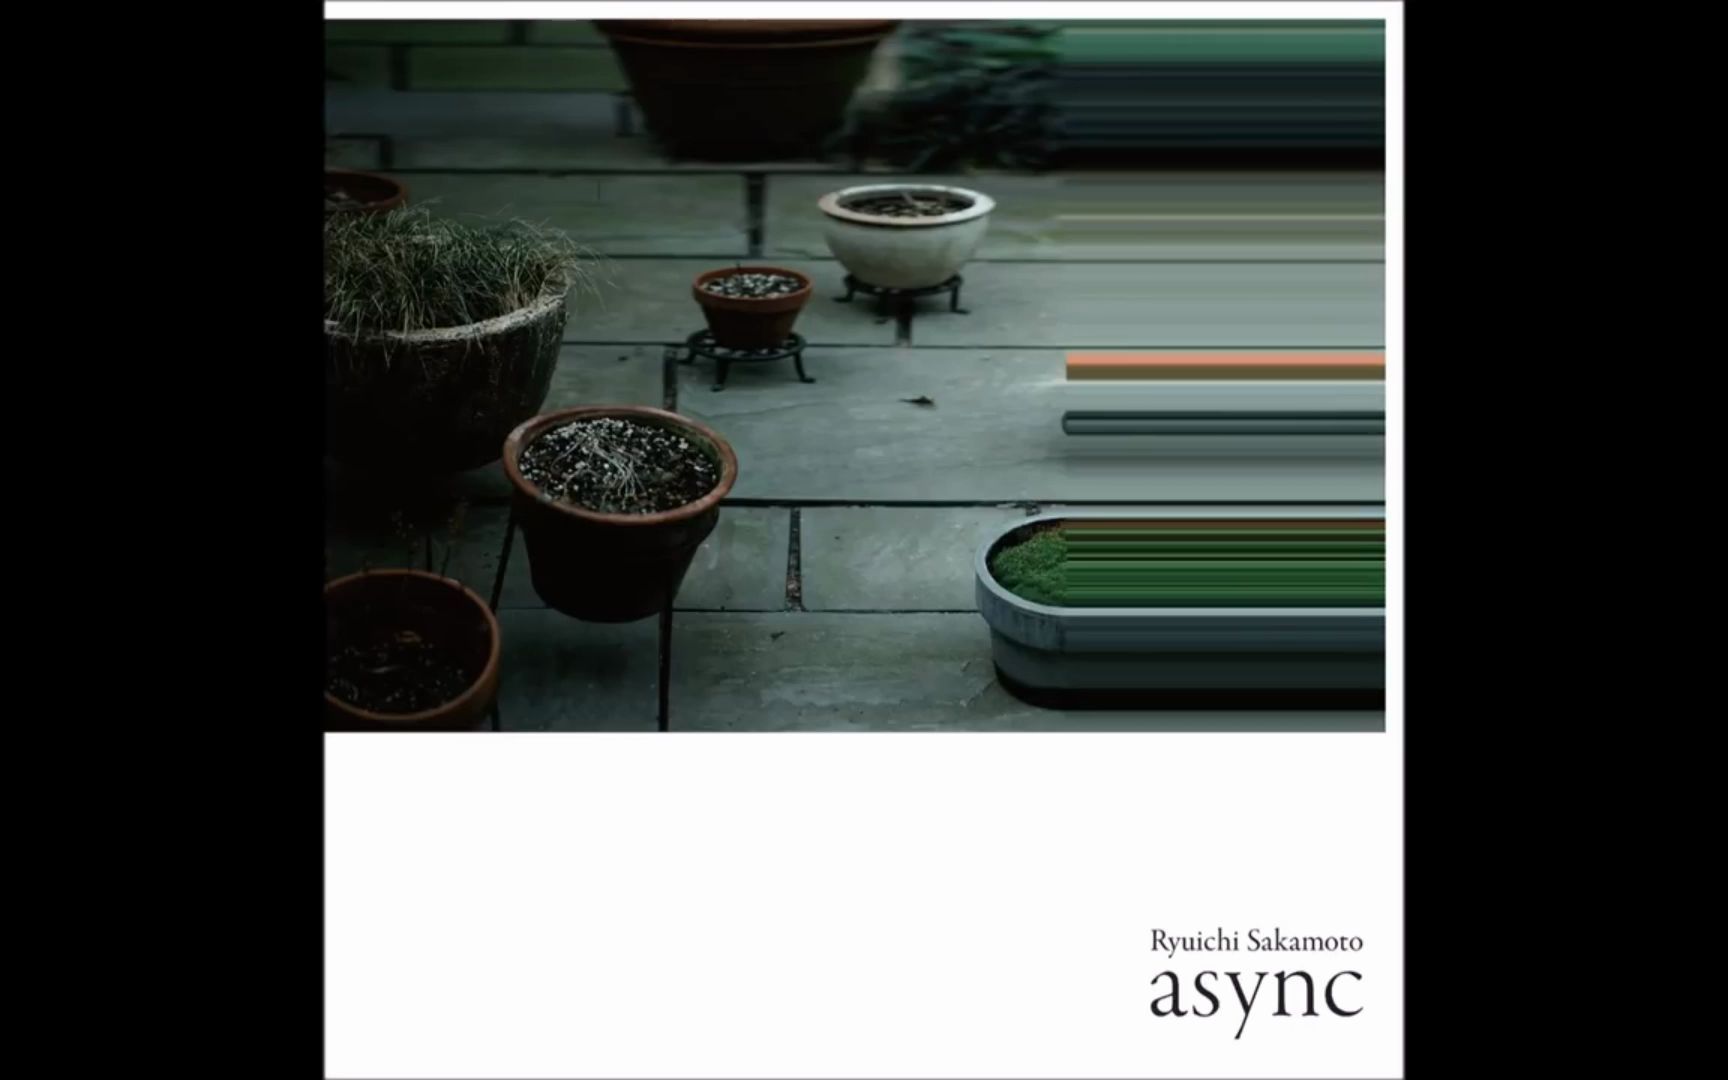 Async-Ryuichi Sakamoto-坂本龙一| Async-整轨-沉浸在每个短暂的黑暗